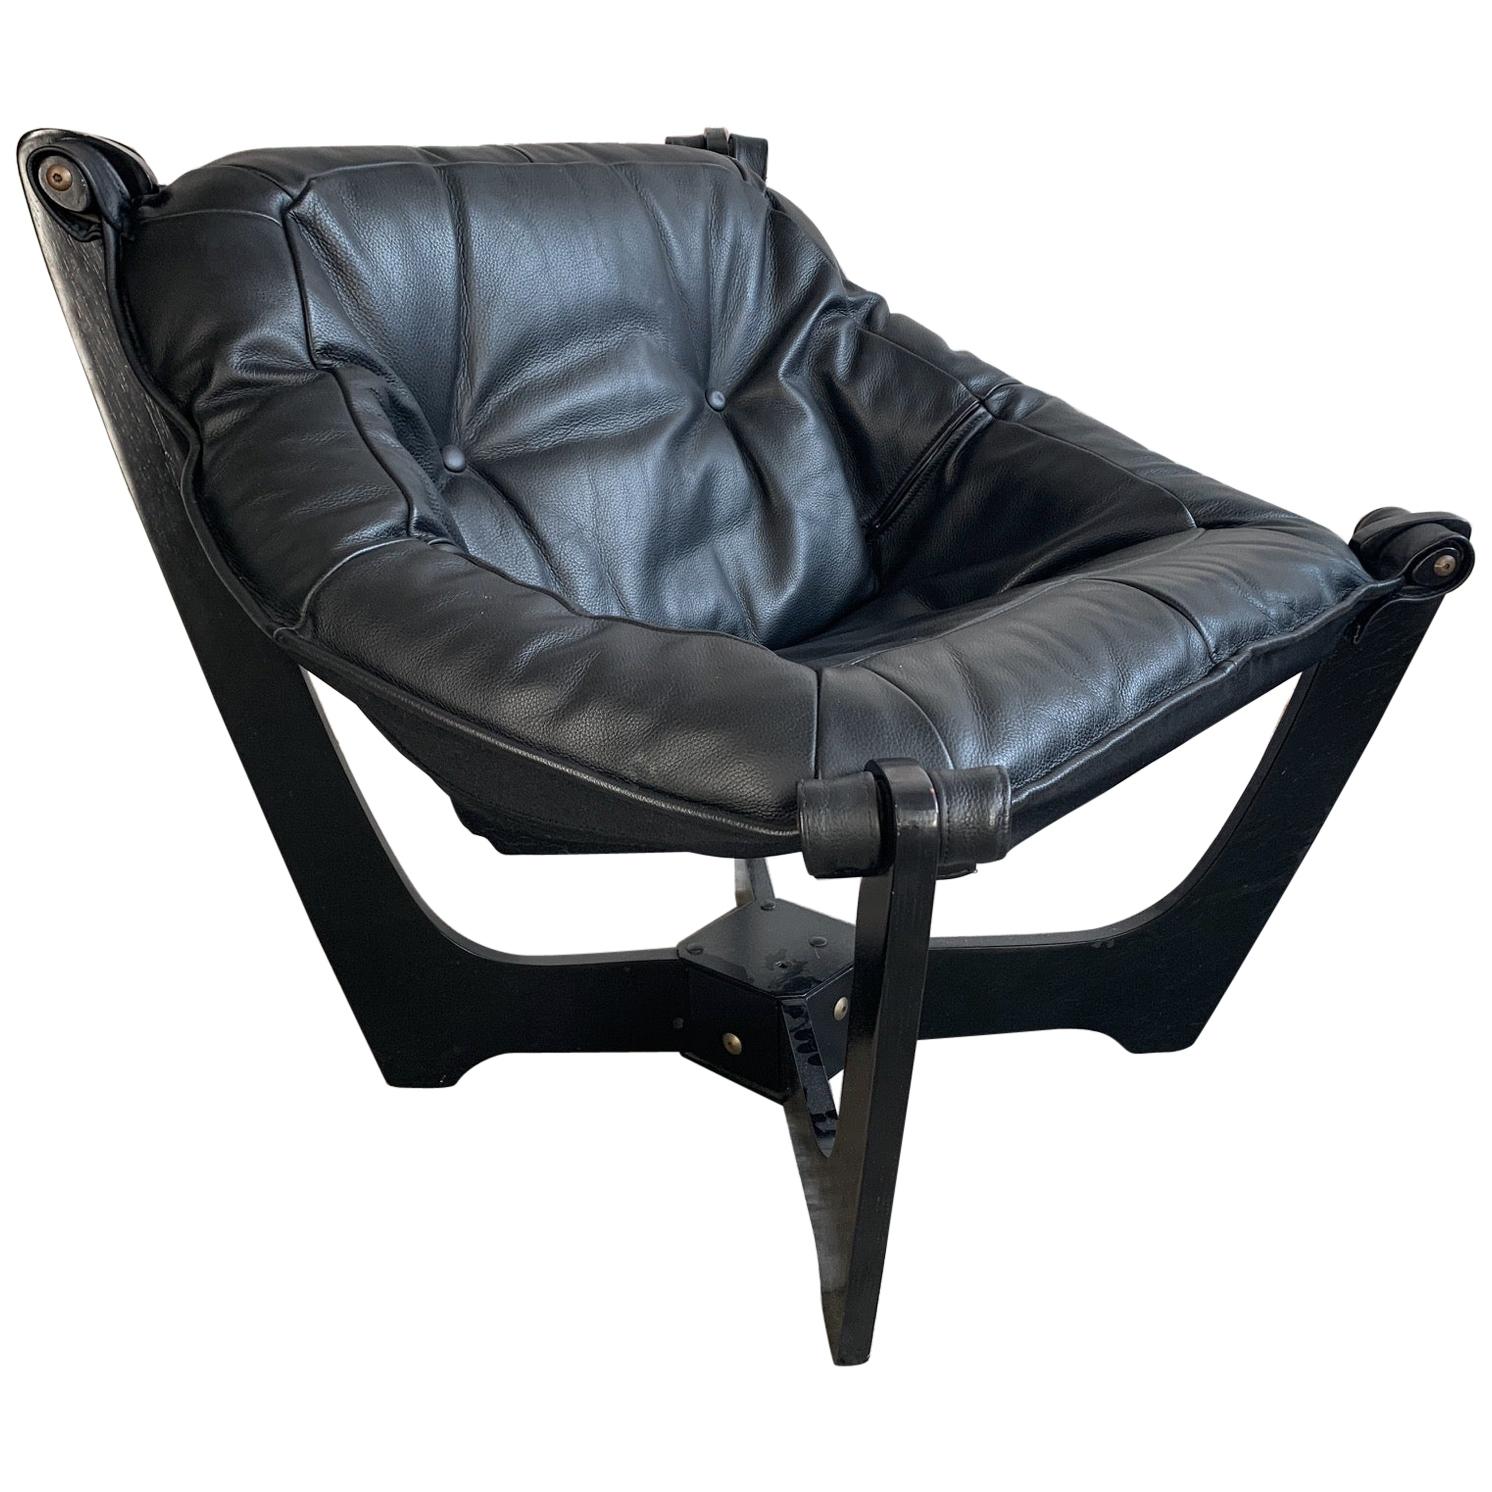 "Luna" Lounge Chair by Odd Knutsen in Black Leather